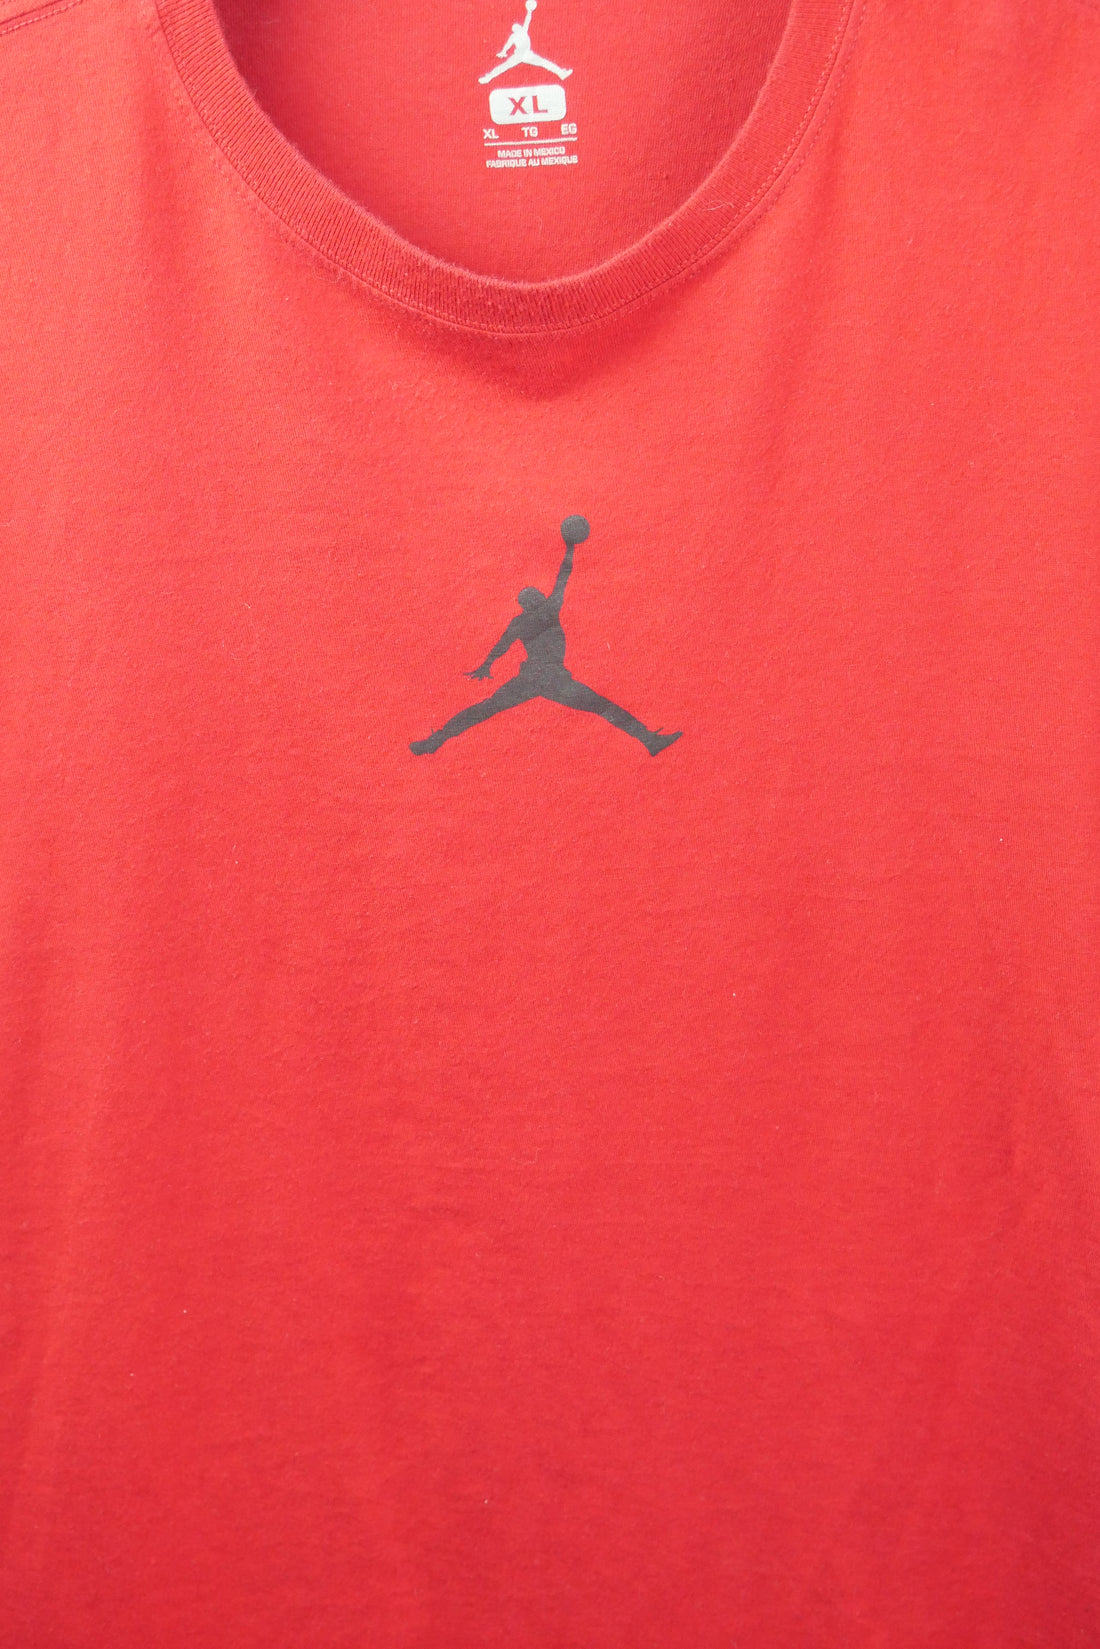 The Nike Michael Jordan T-shirt (XL)